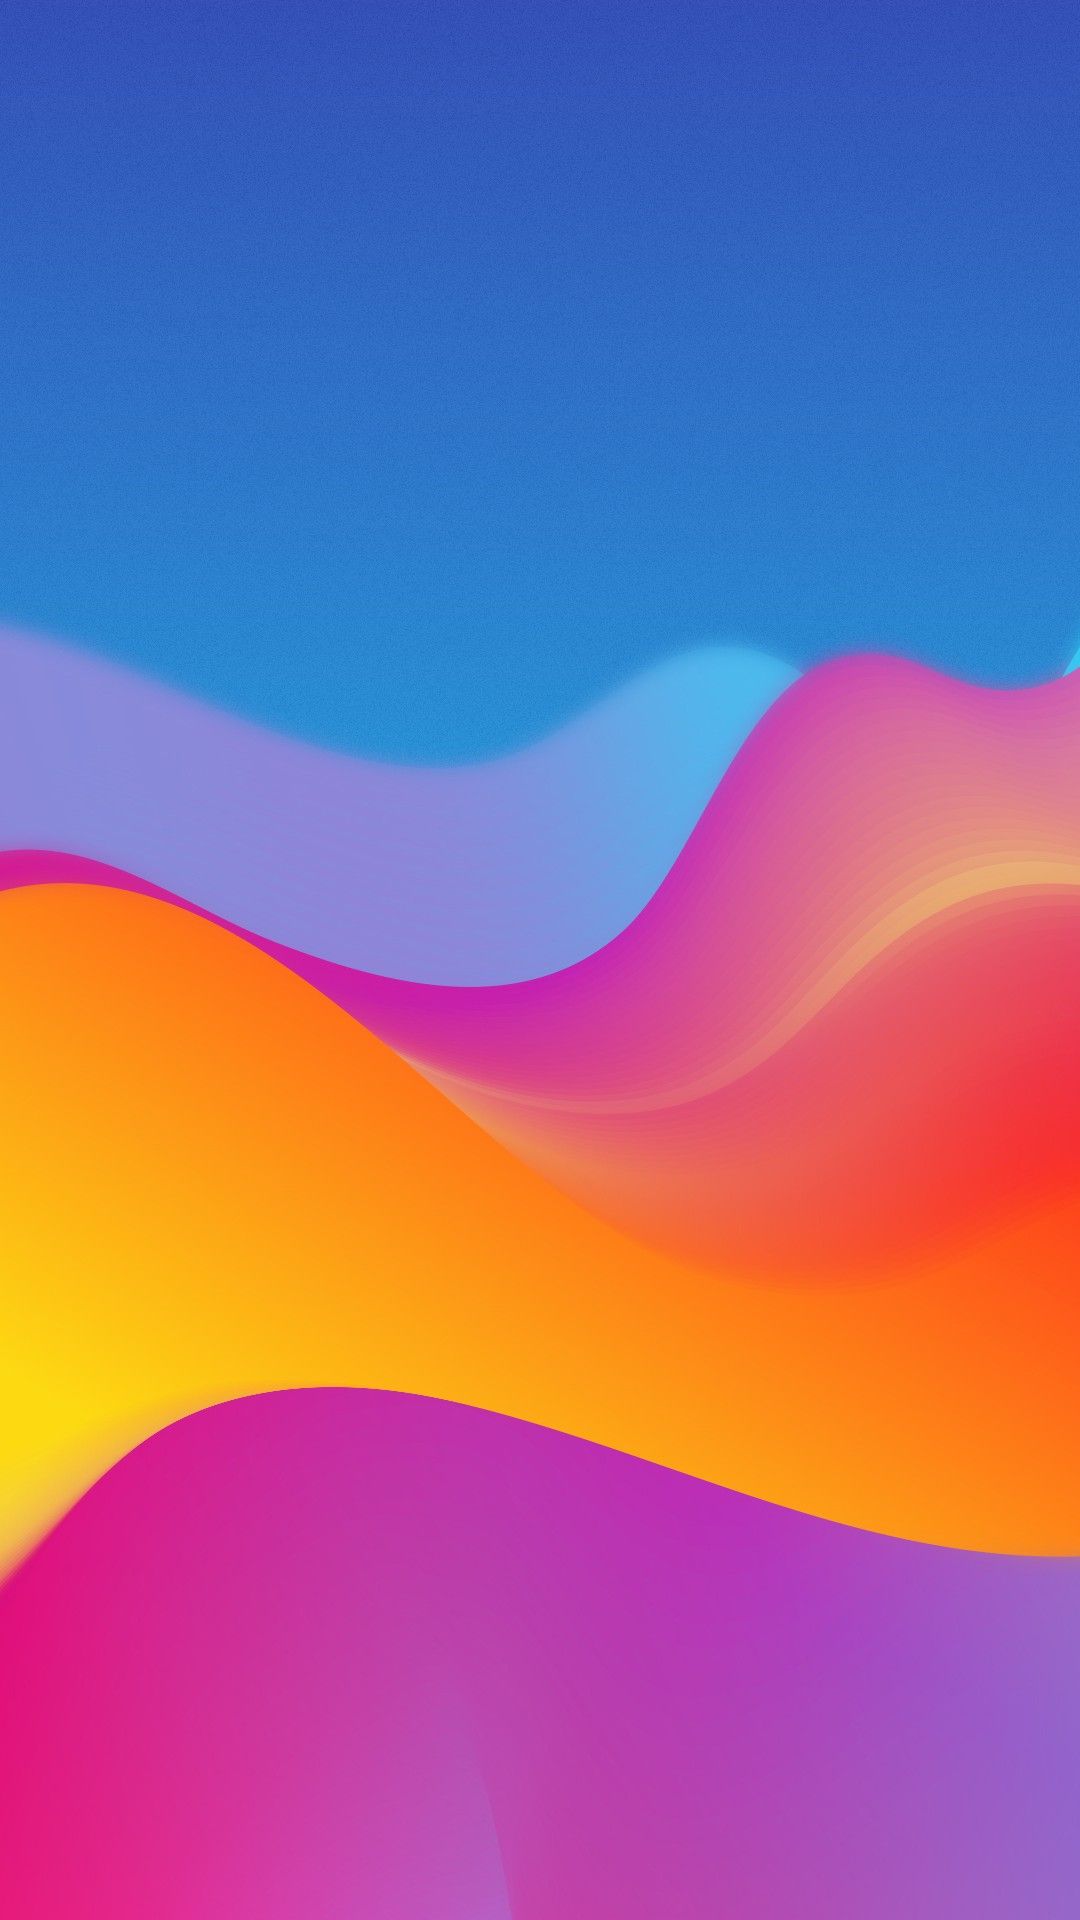 iPhone Wallpaper. Blue, Sky, Orange, Purple, Pink, Red